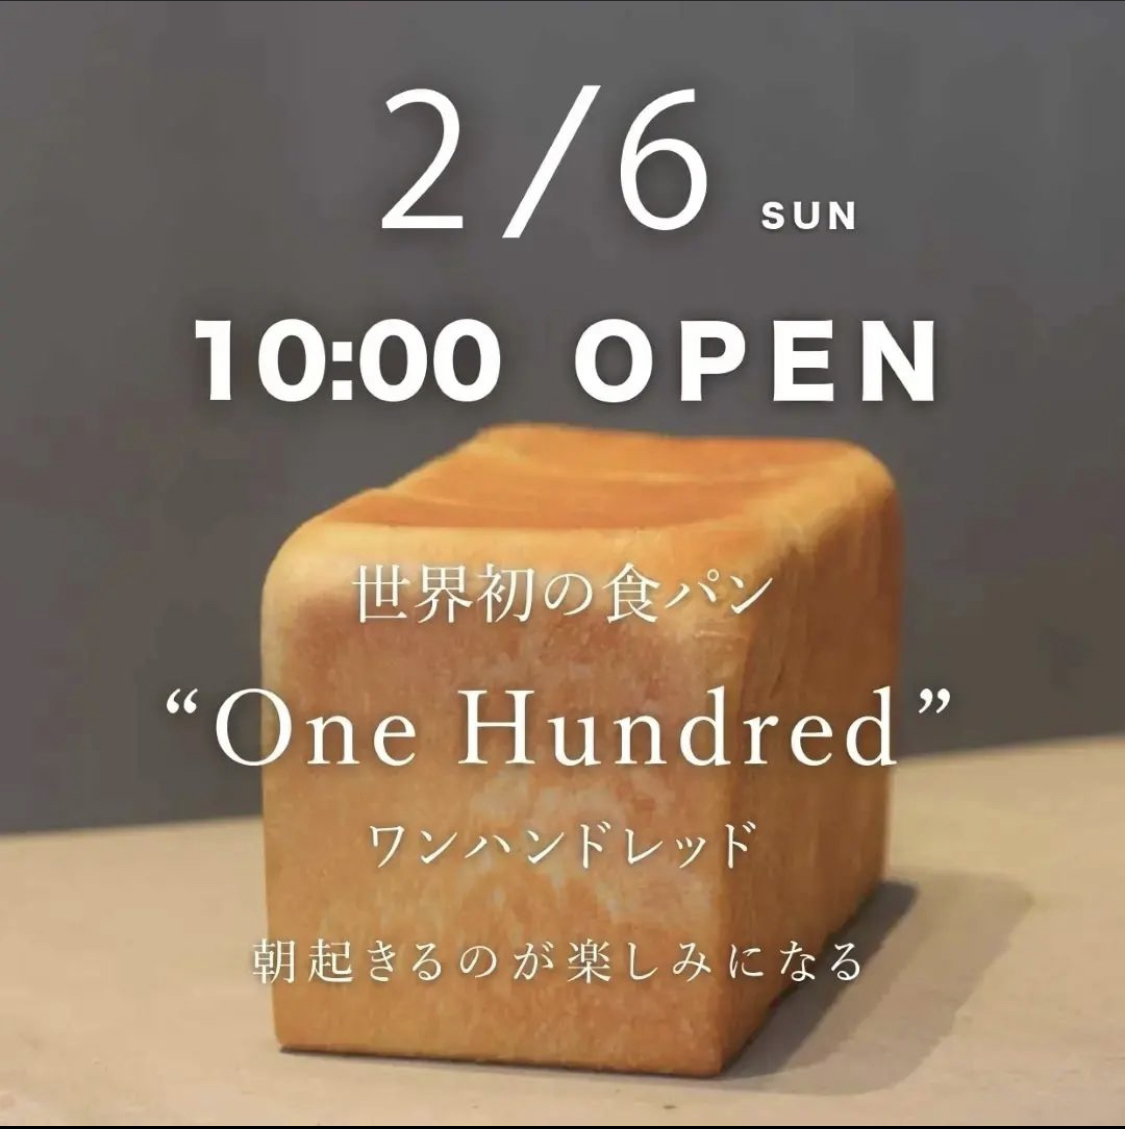 ssɏoXIE̐HpœEmŘAsIuOne Hundred BakeryvX26NEW OPENI